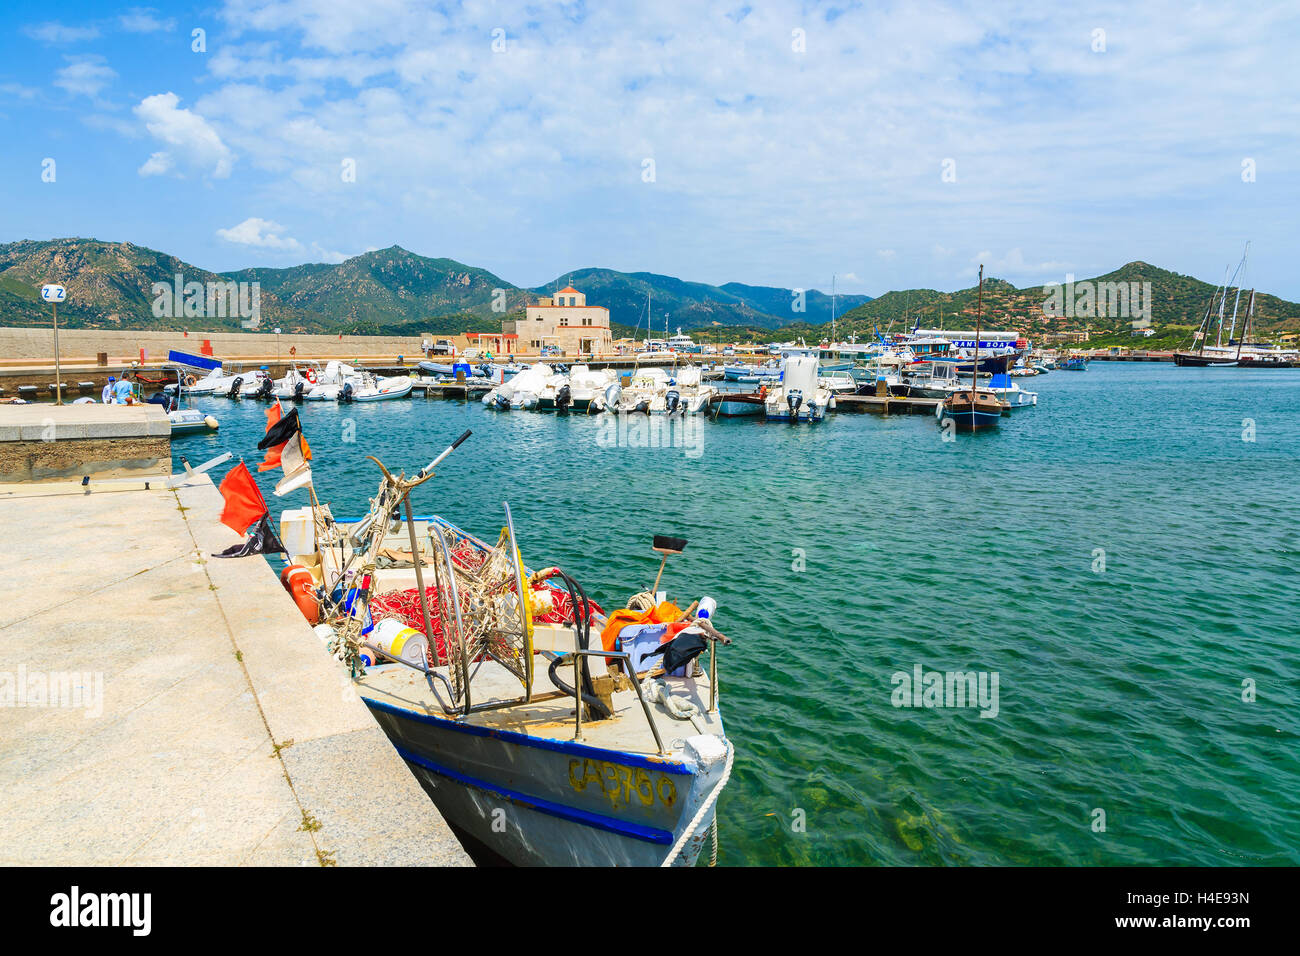 PORTO GIUNCO PORT, SARDINIA - MAY 25, 2014: fishing boat and net on shore in Porto Giunco touristic port, Sardinia island, Italy. Many tourists visit Sardinia island in summer time. Stock Photo